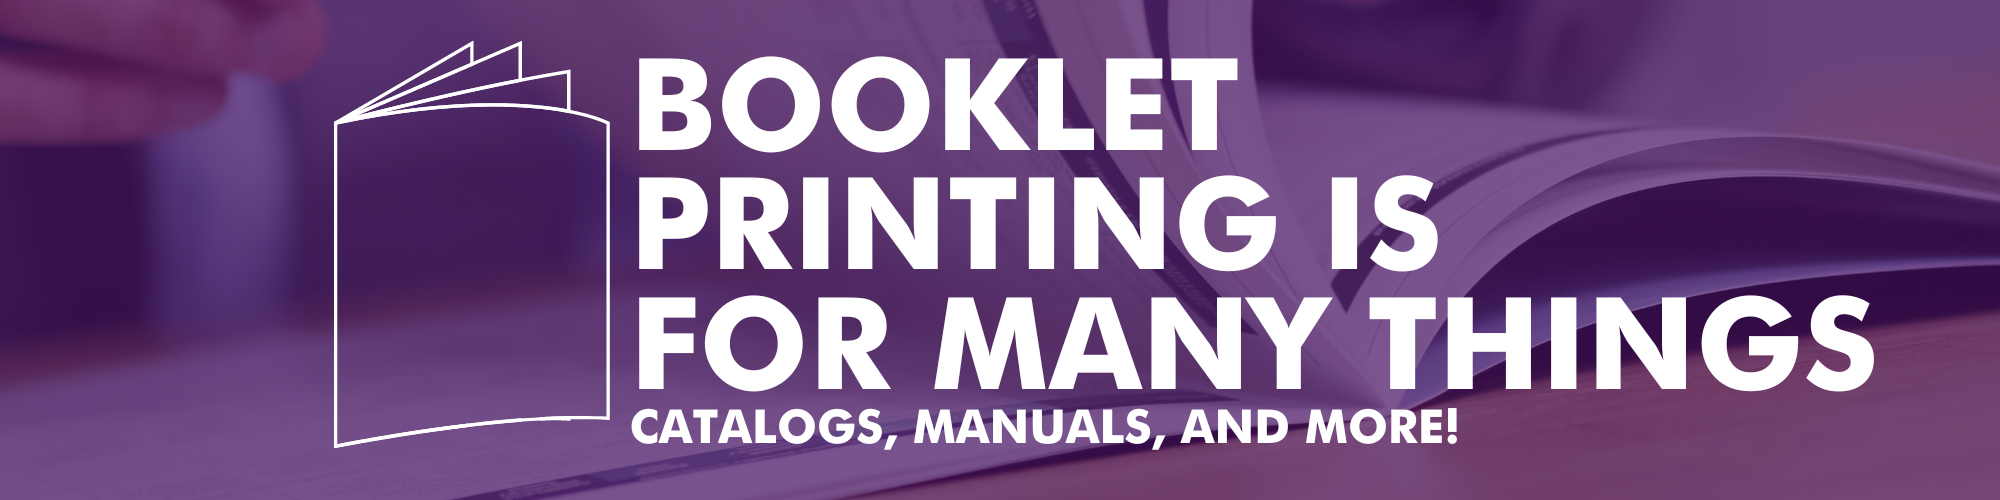 Booklet Printing Website Banner